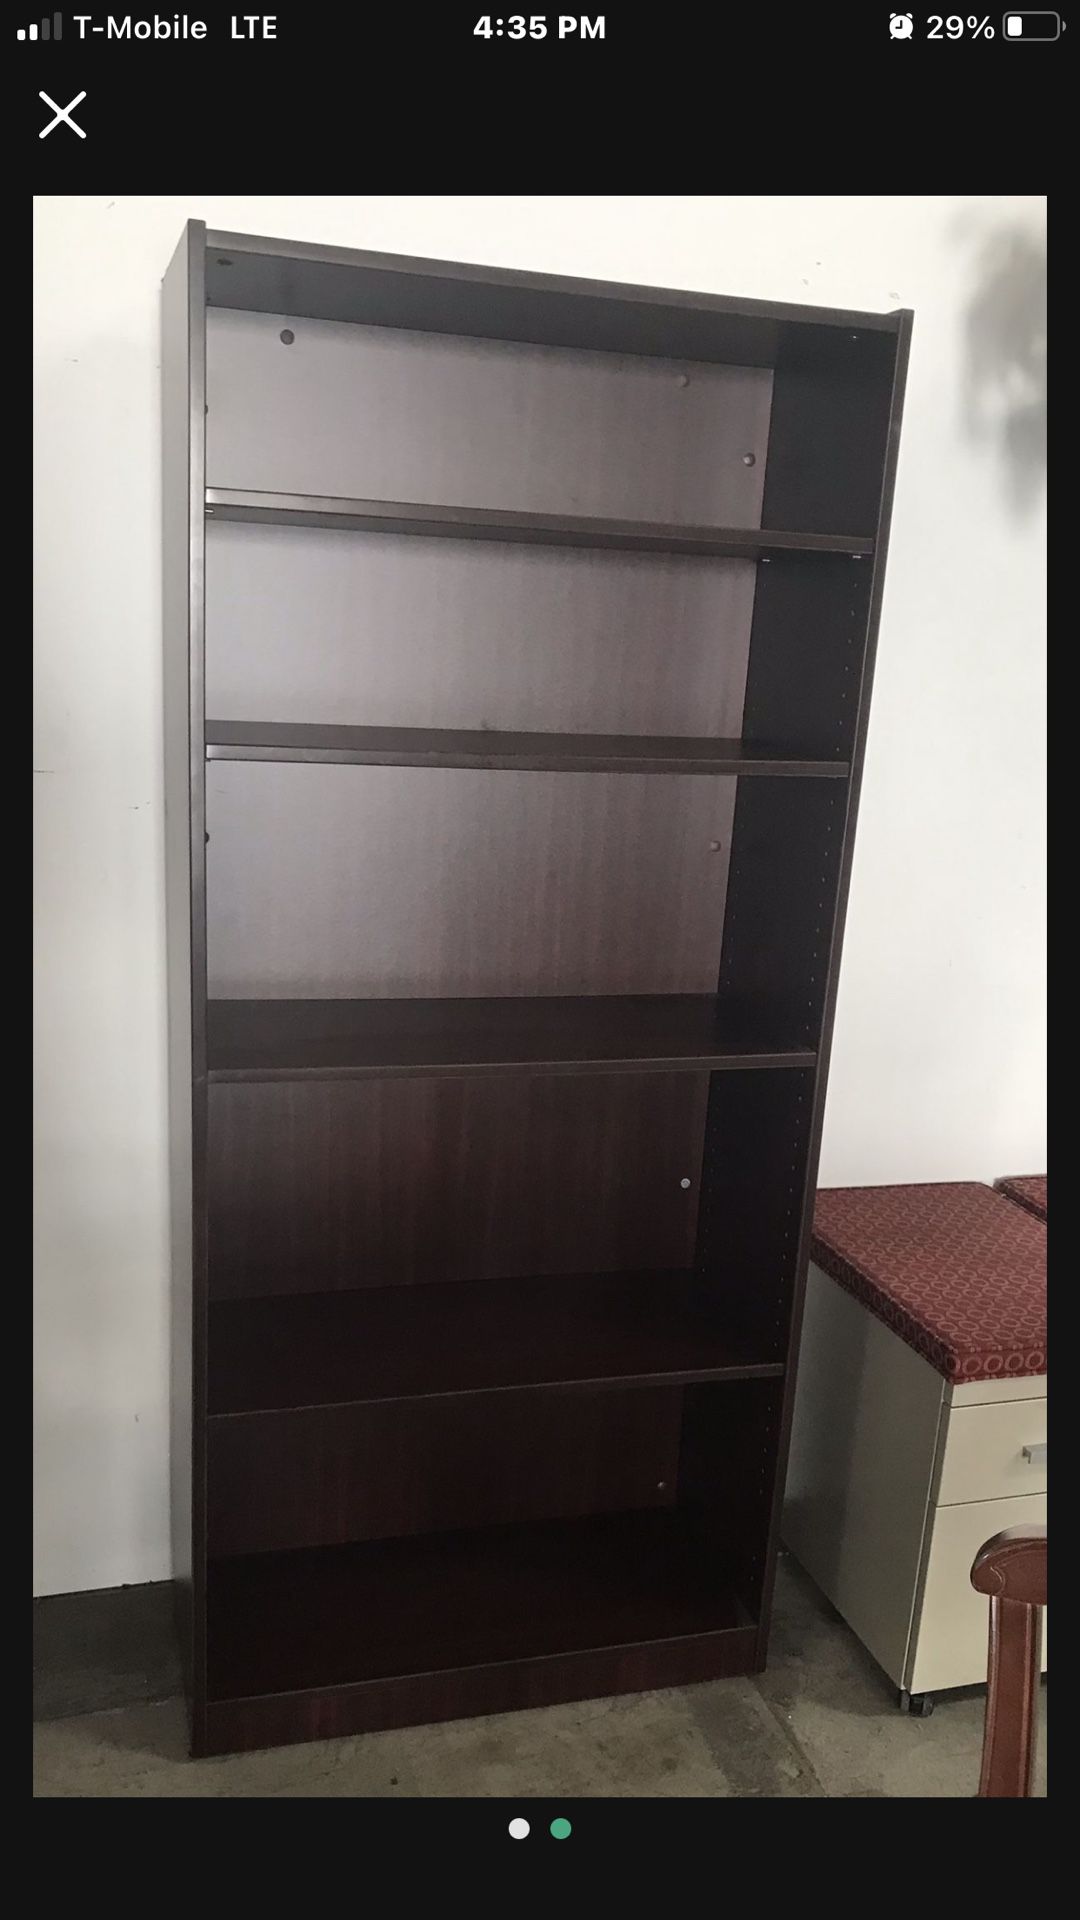 Bookcase / Storage Cabinet/ Shelving 